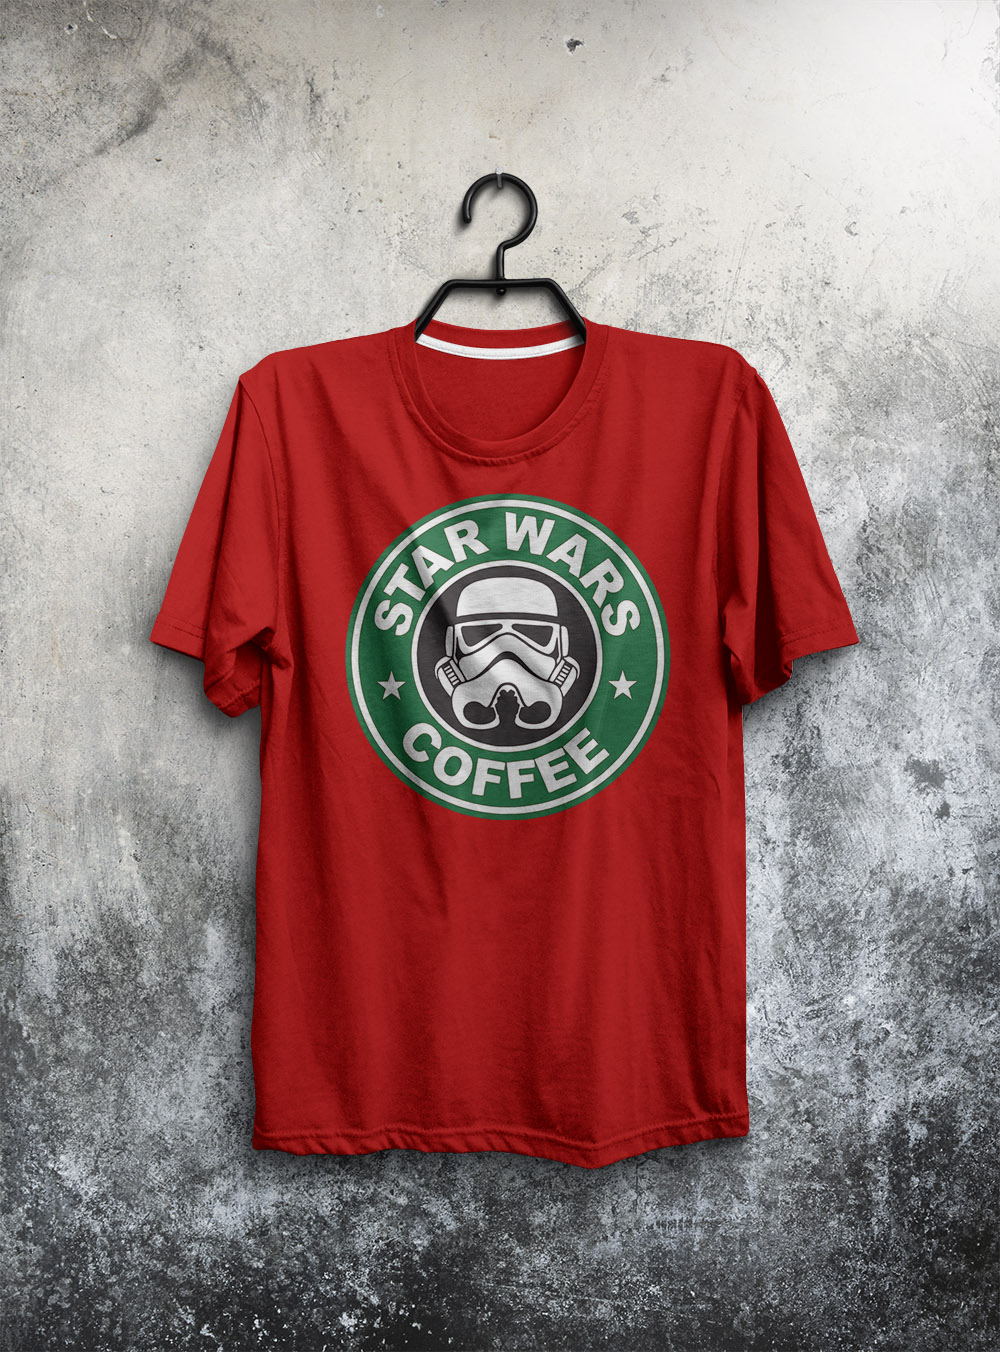 star wars coffee t shirt